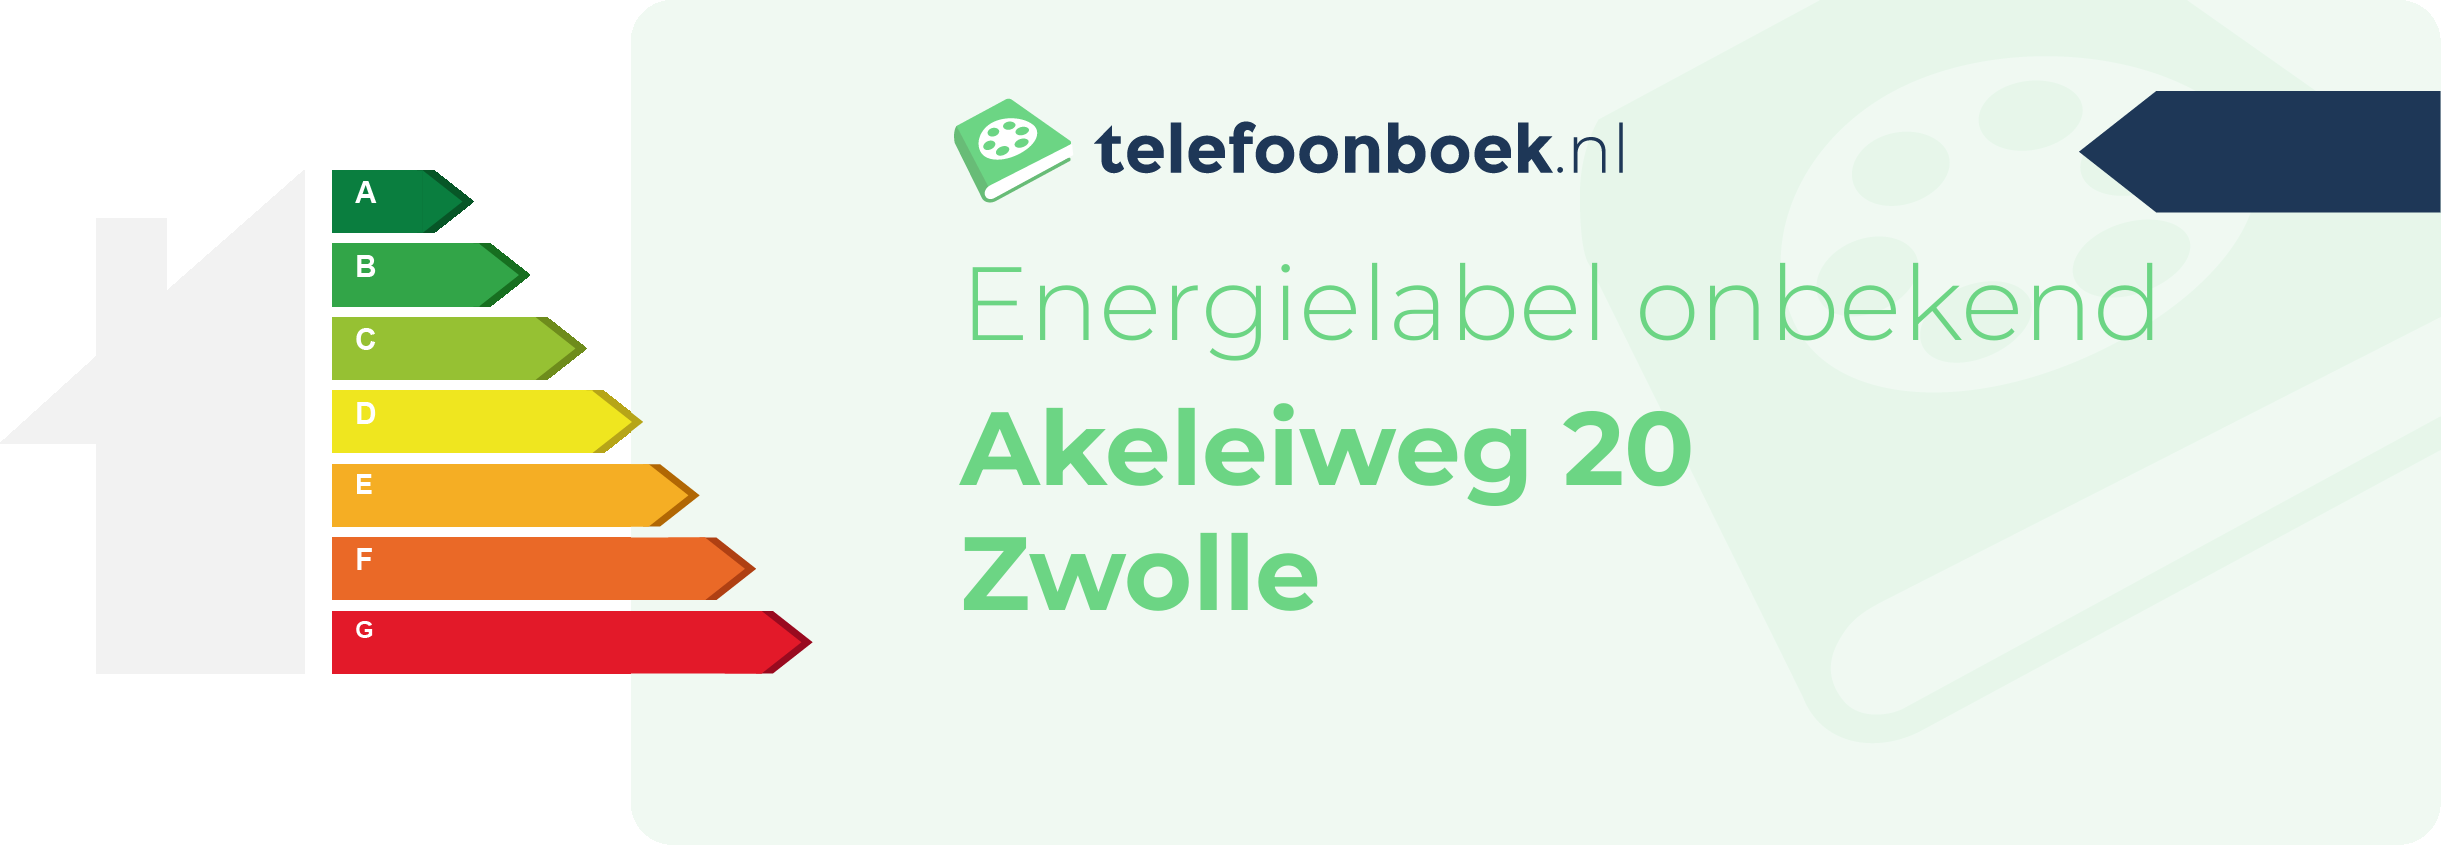 Energielabel Akeleiweg 20 Zwolle